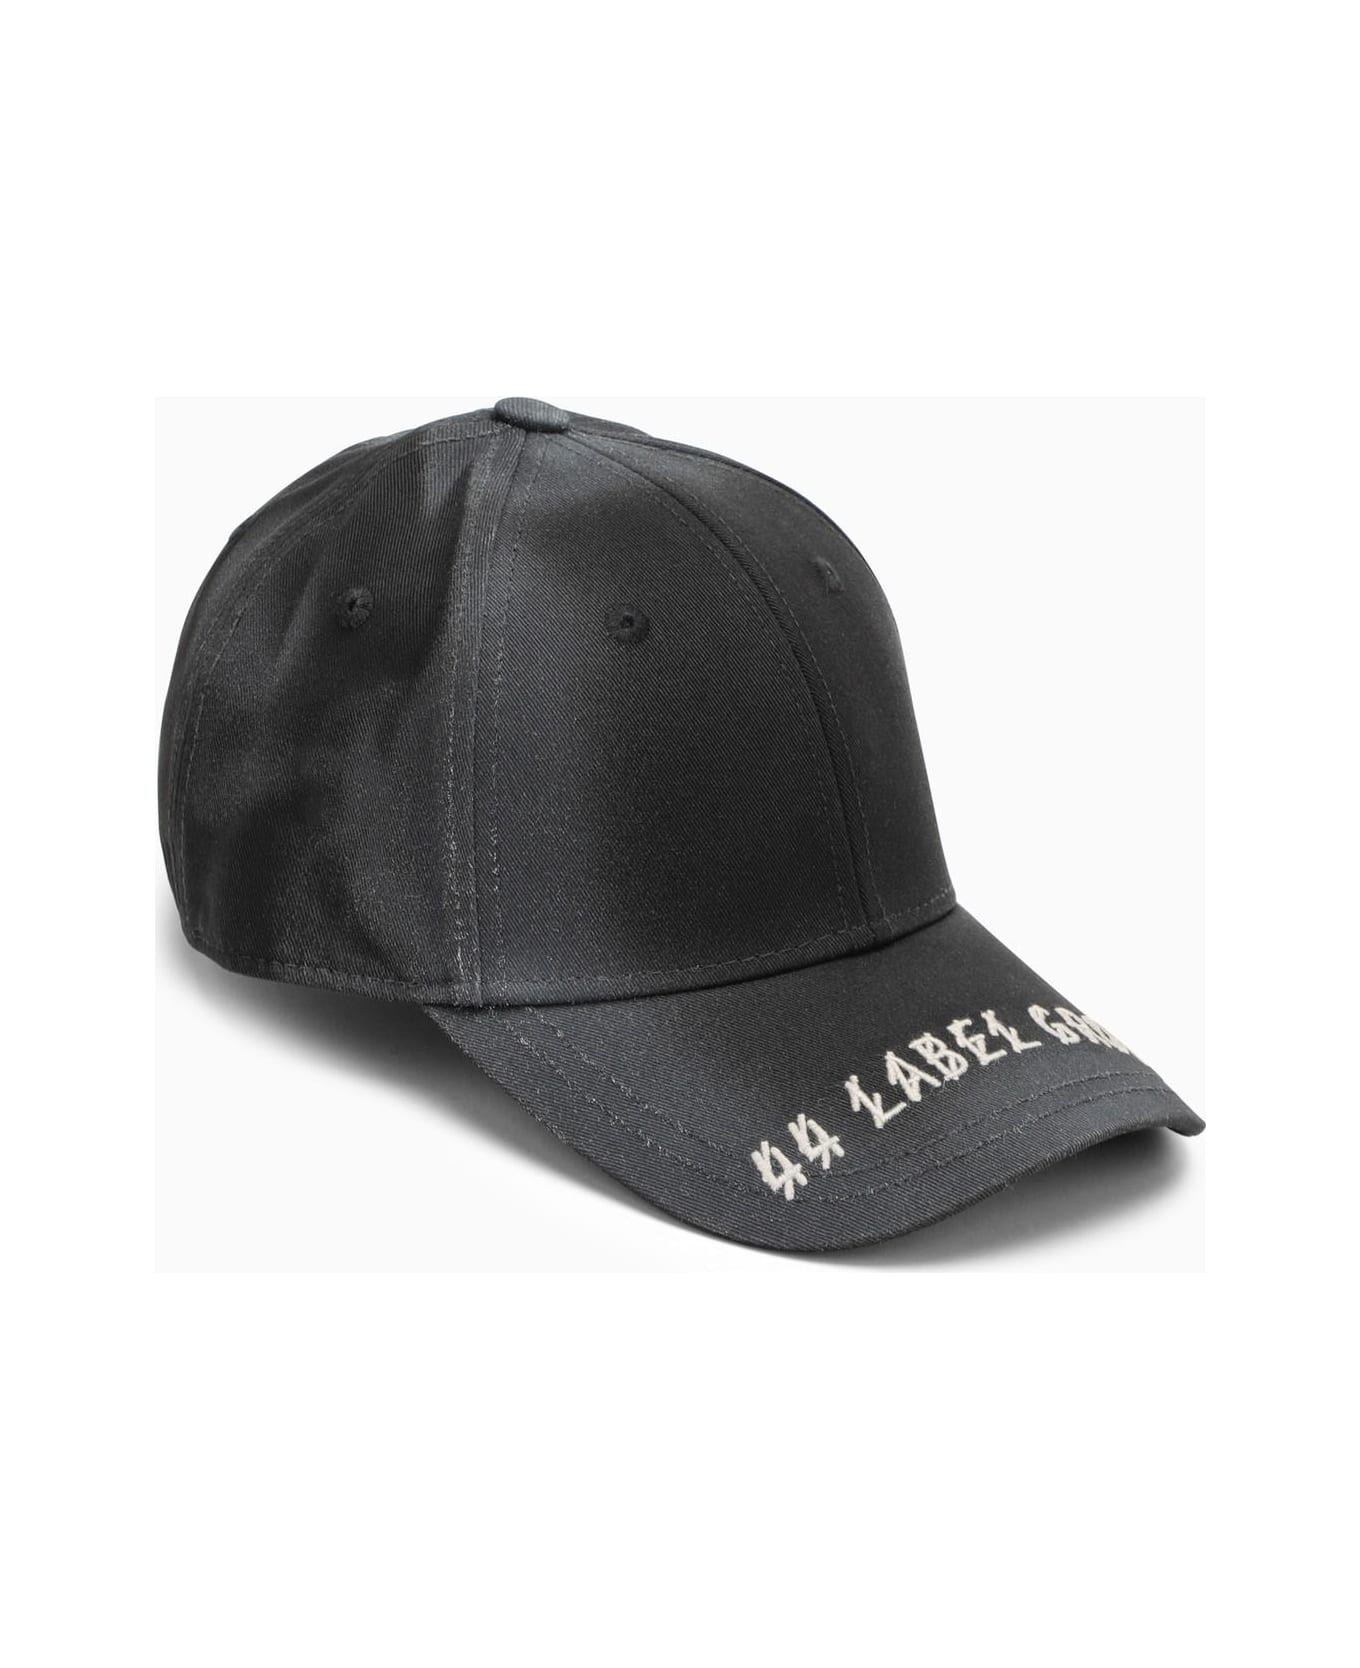 44 Label Group Black Visor Hat With Logo Embroidery - Black